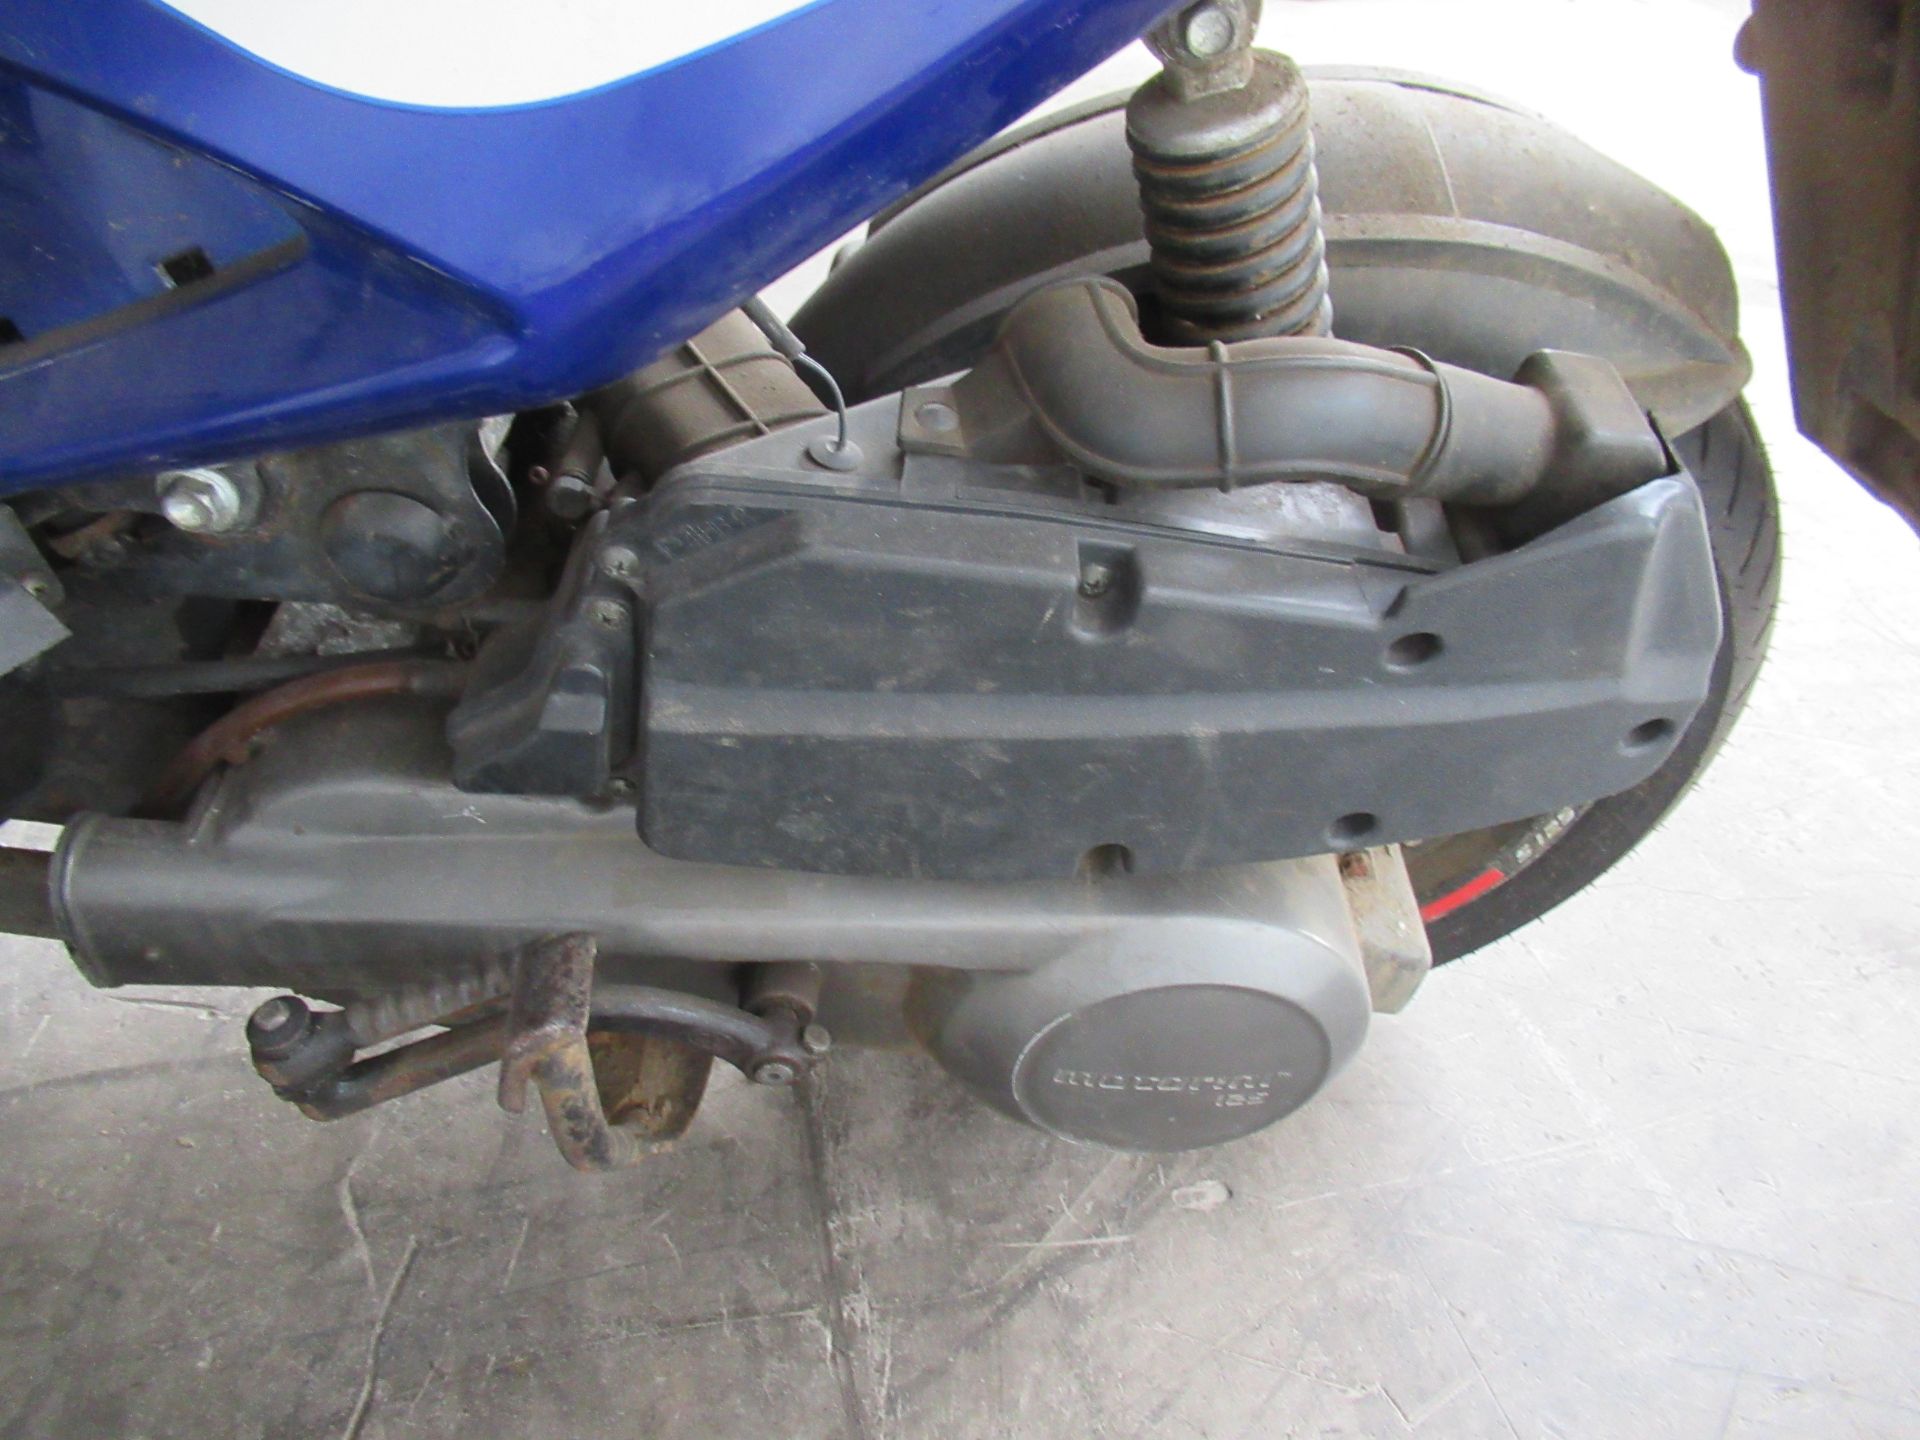 3x Motorini GP125i motorbikes - Image 17 of 30